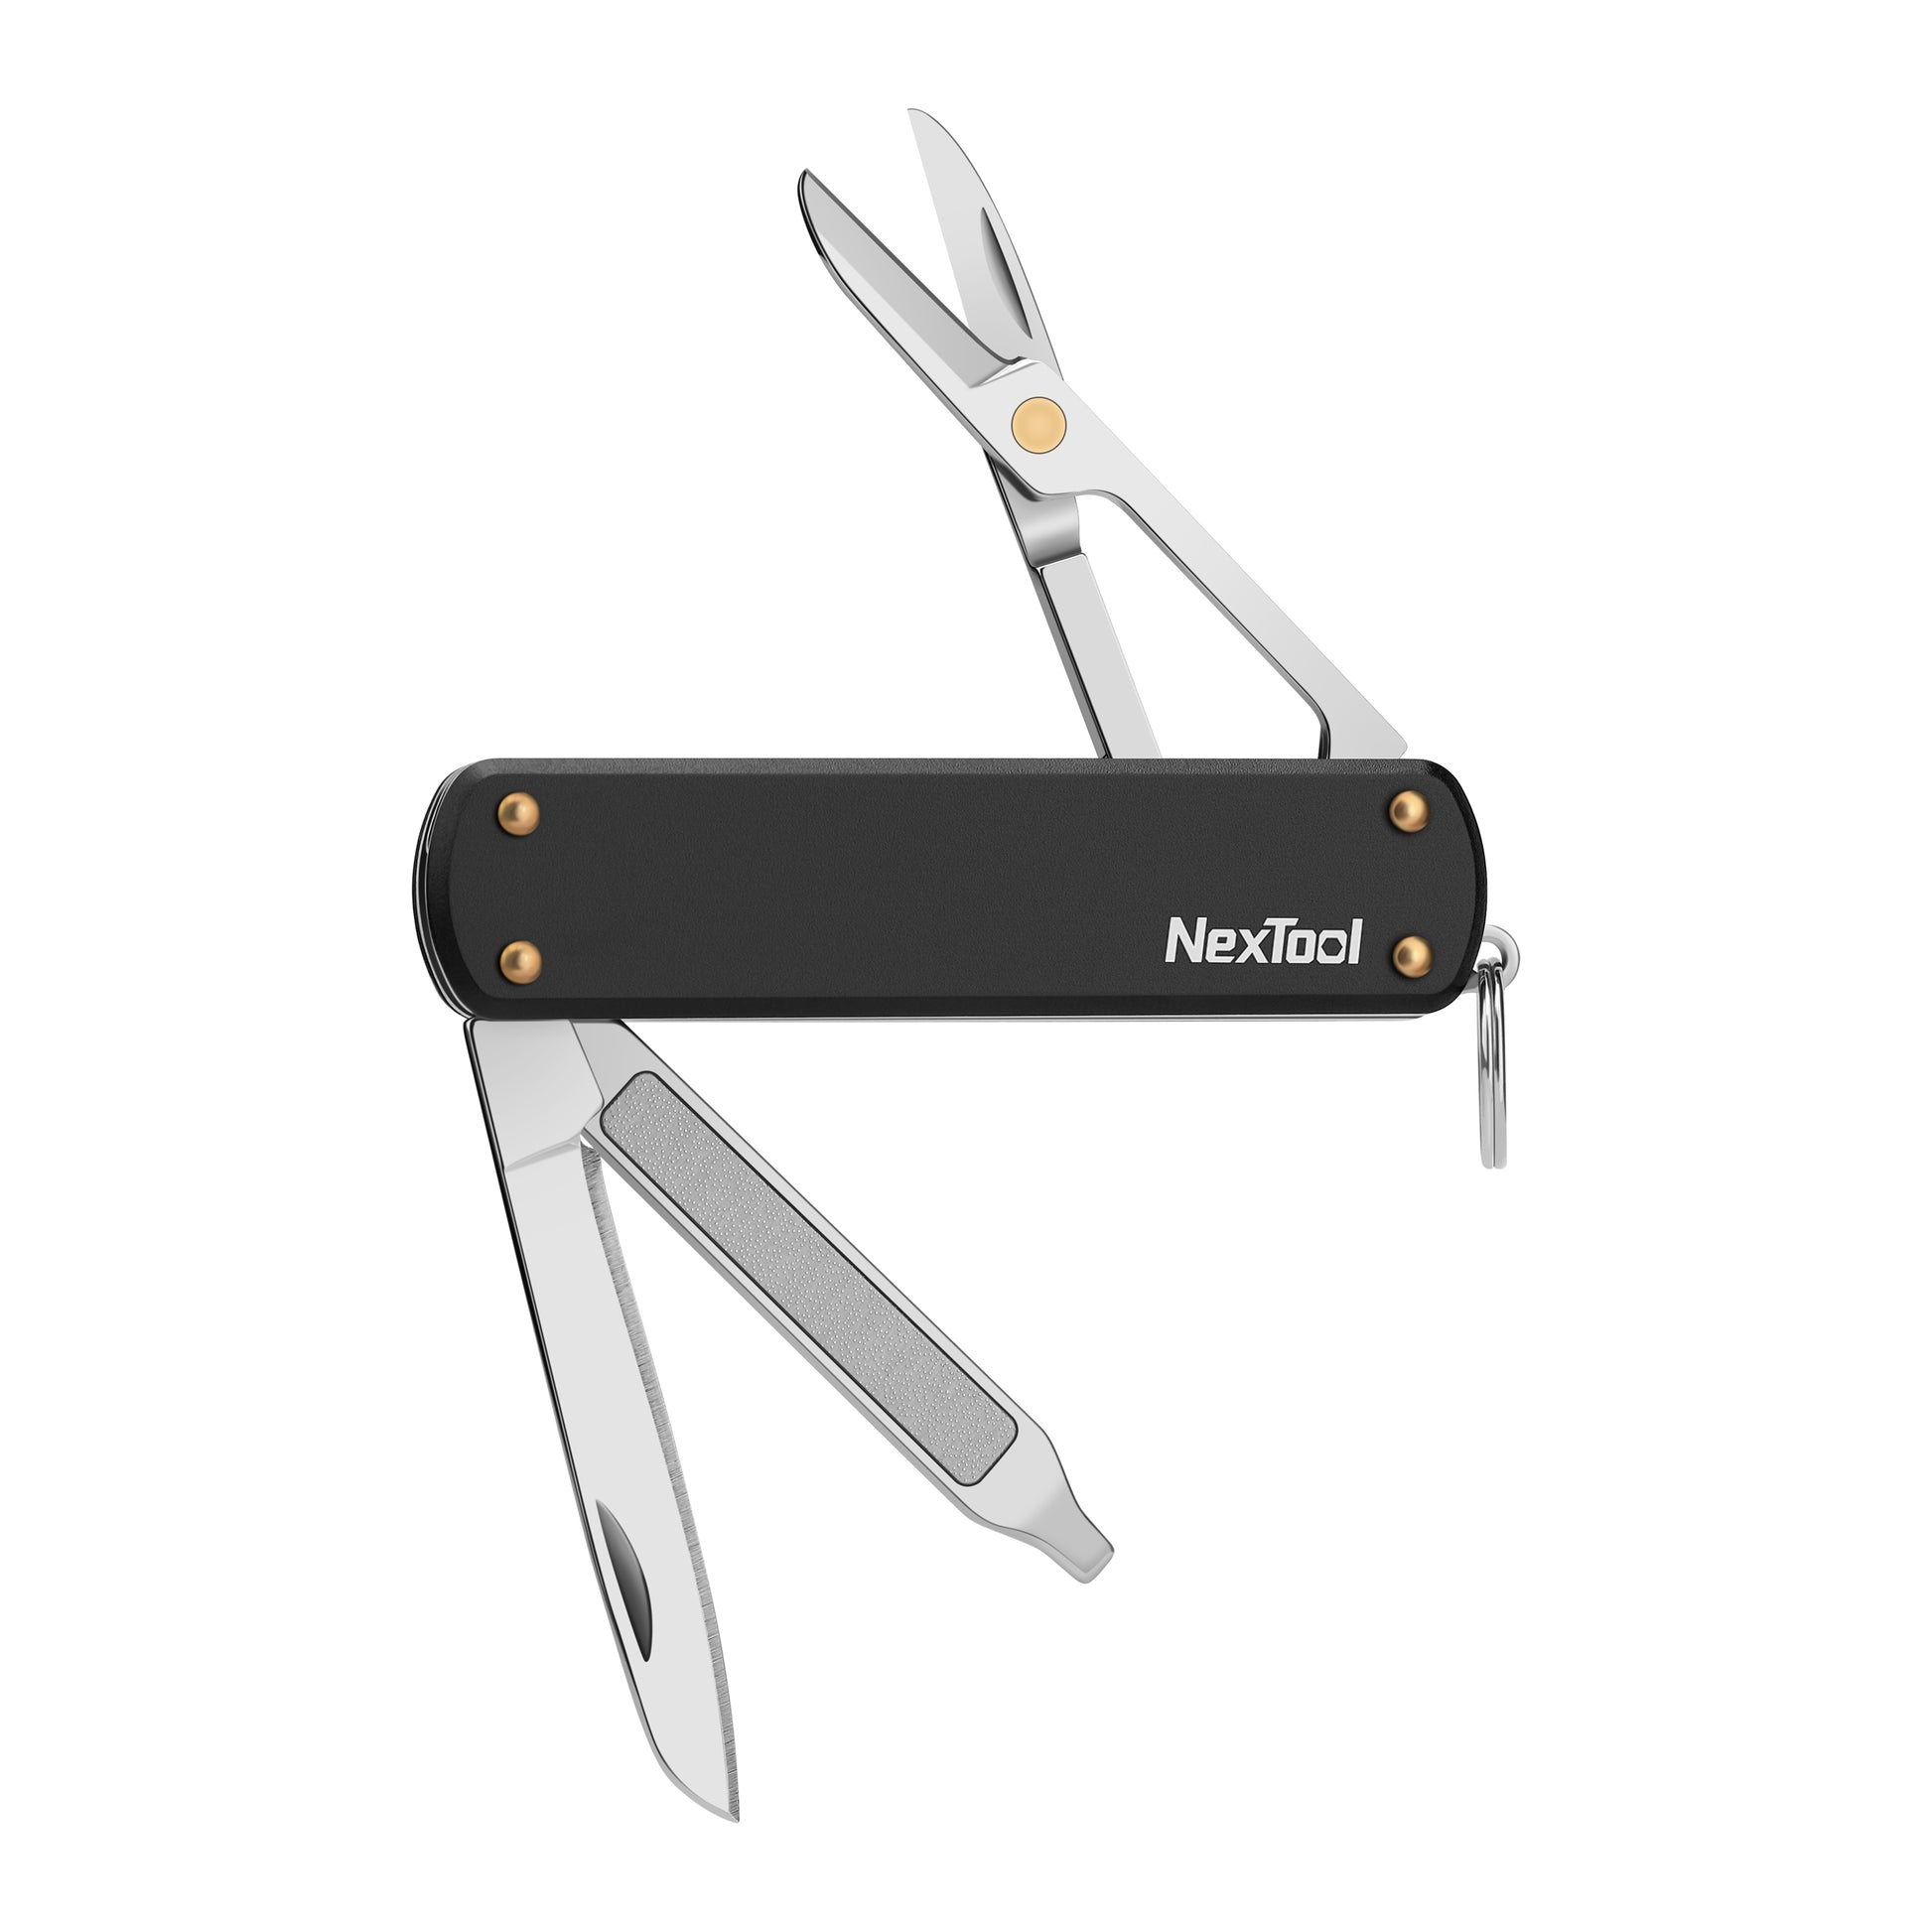 Nextool EDC Multi Functional Folding Pocket Knife with Strong